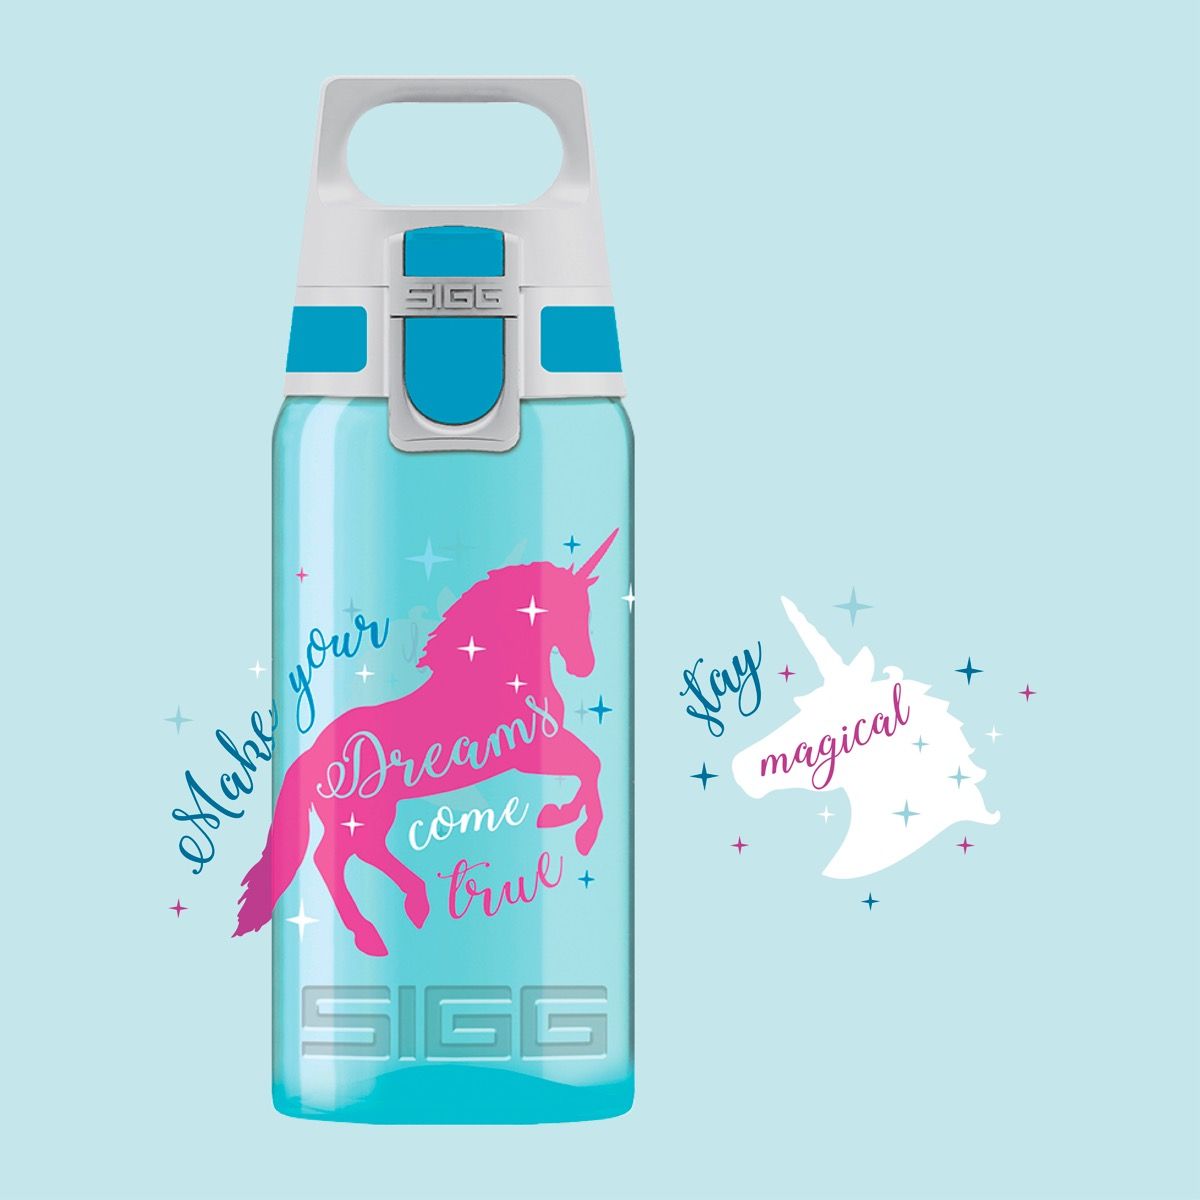 SIGG Kids Water Bottle VIVA ONE Unicorn 0.5 L buy online